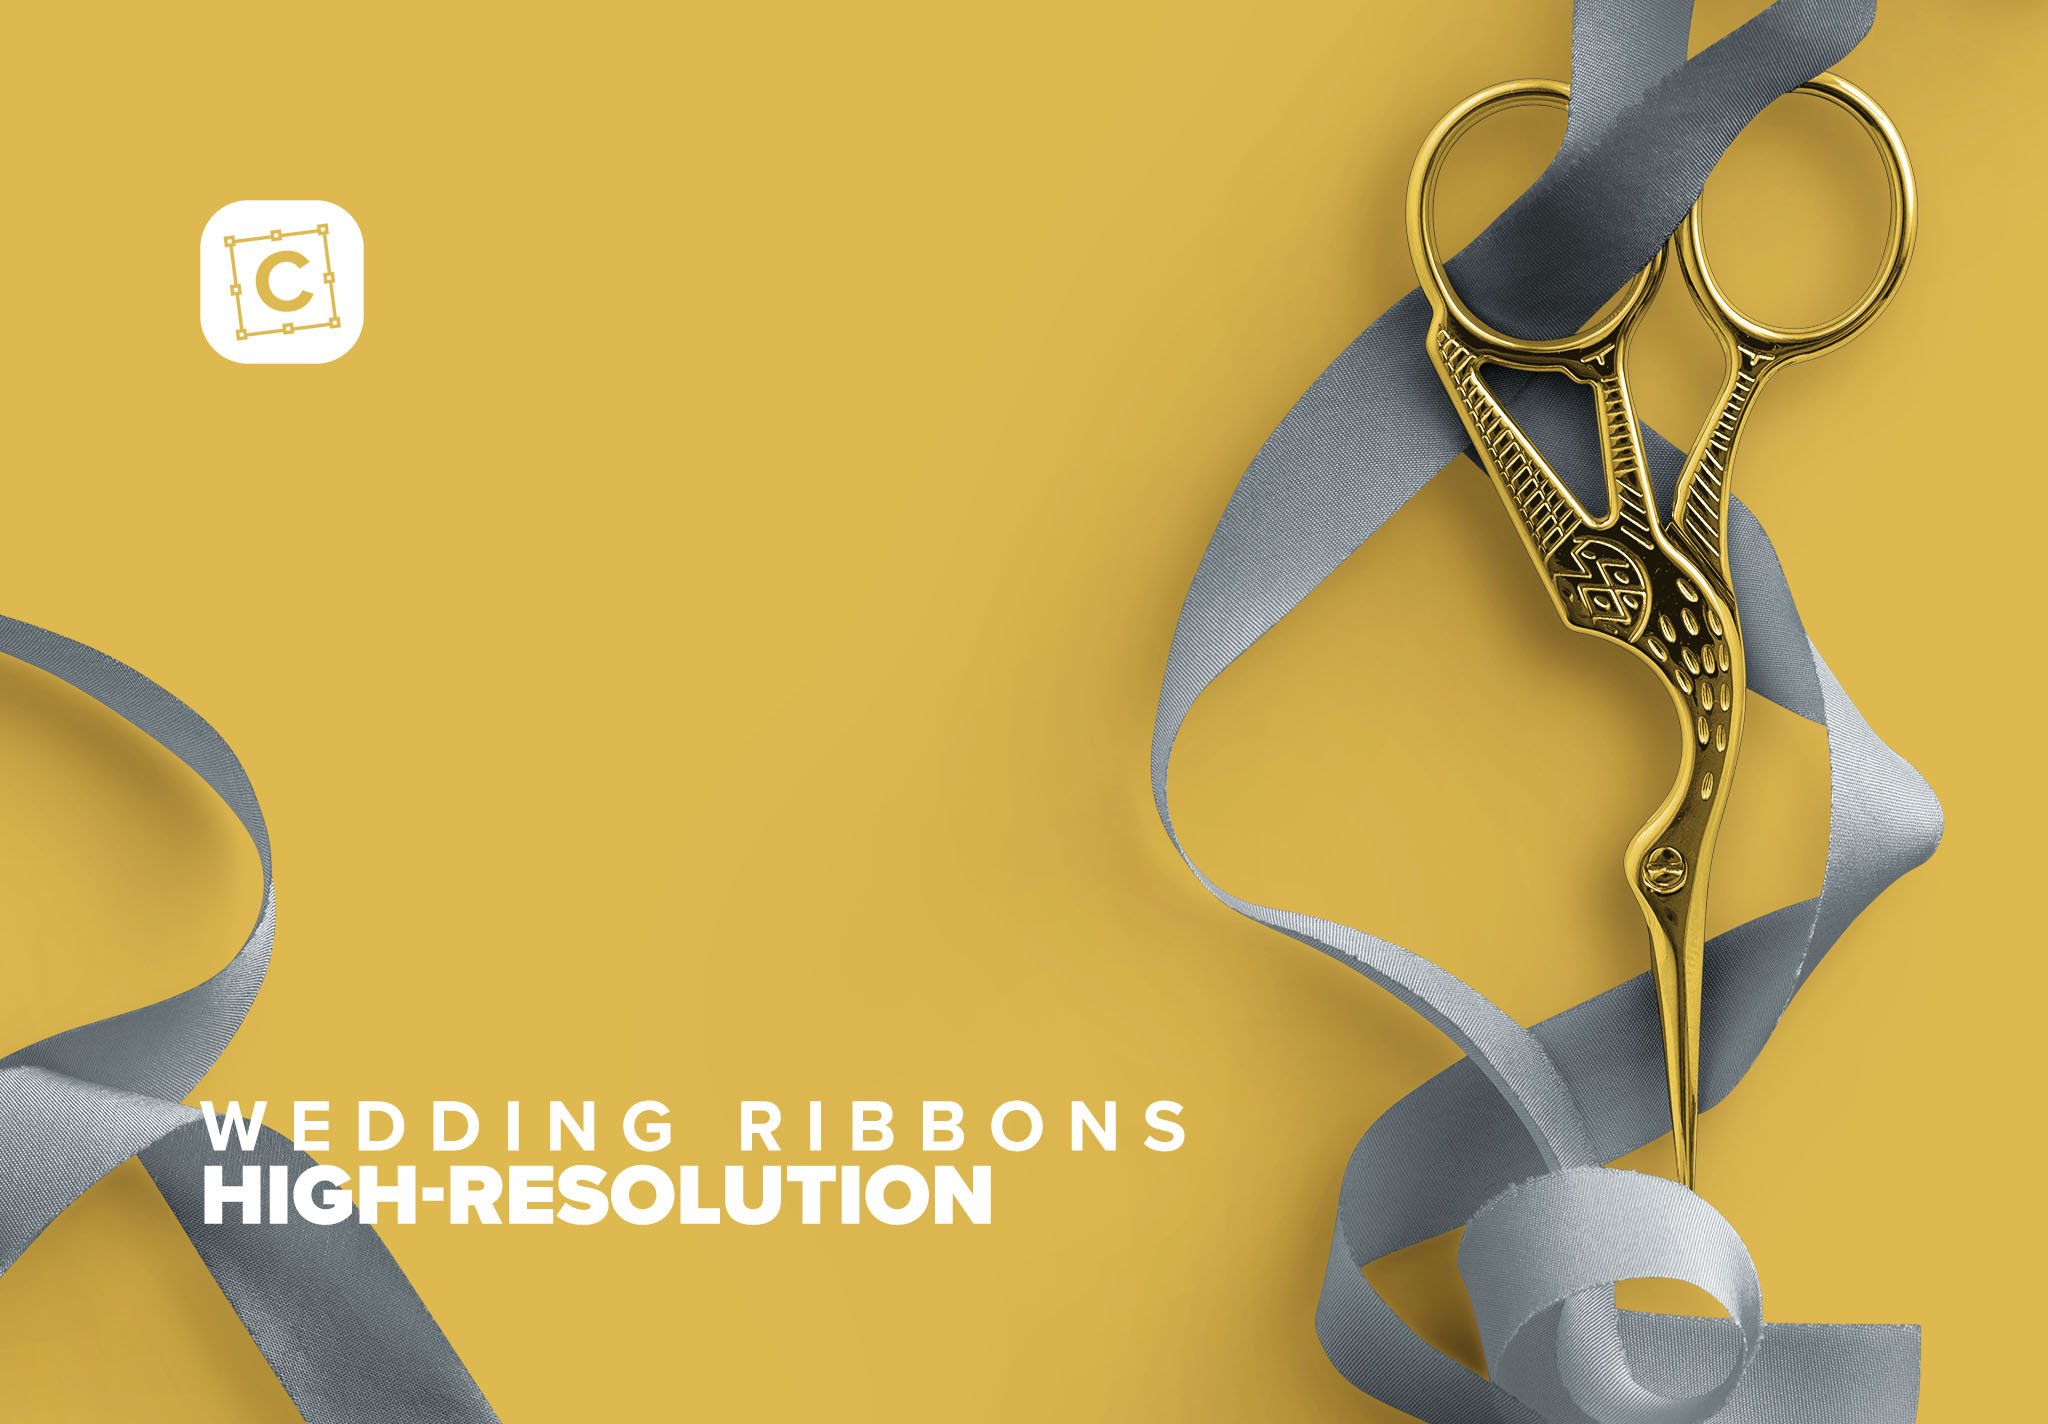 Wedding Ribbons Scene Creator preview image.